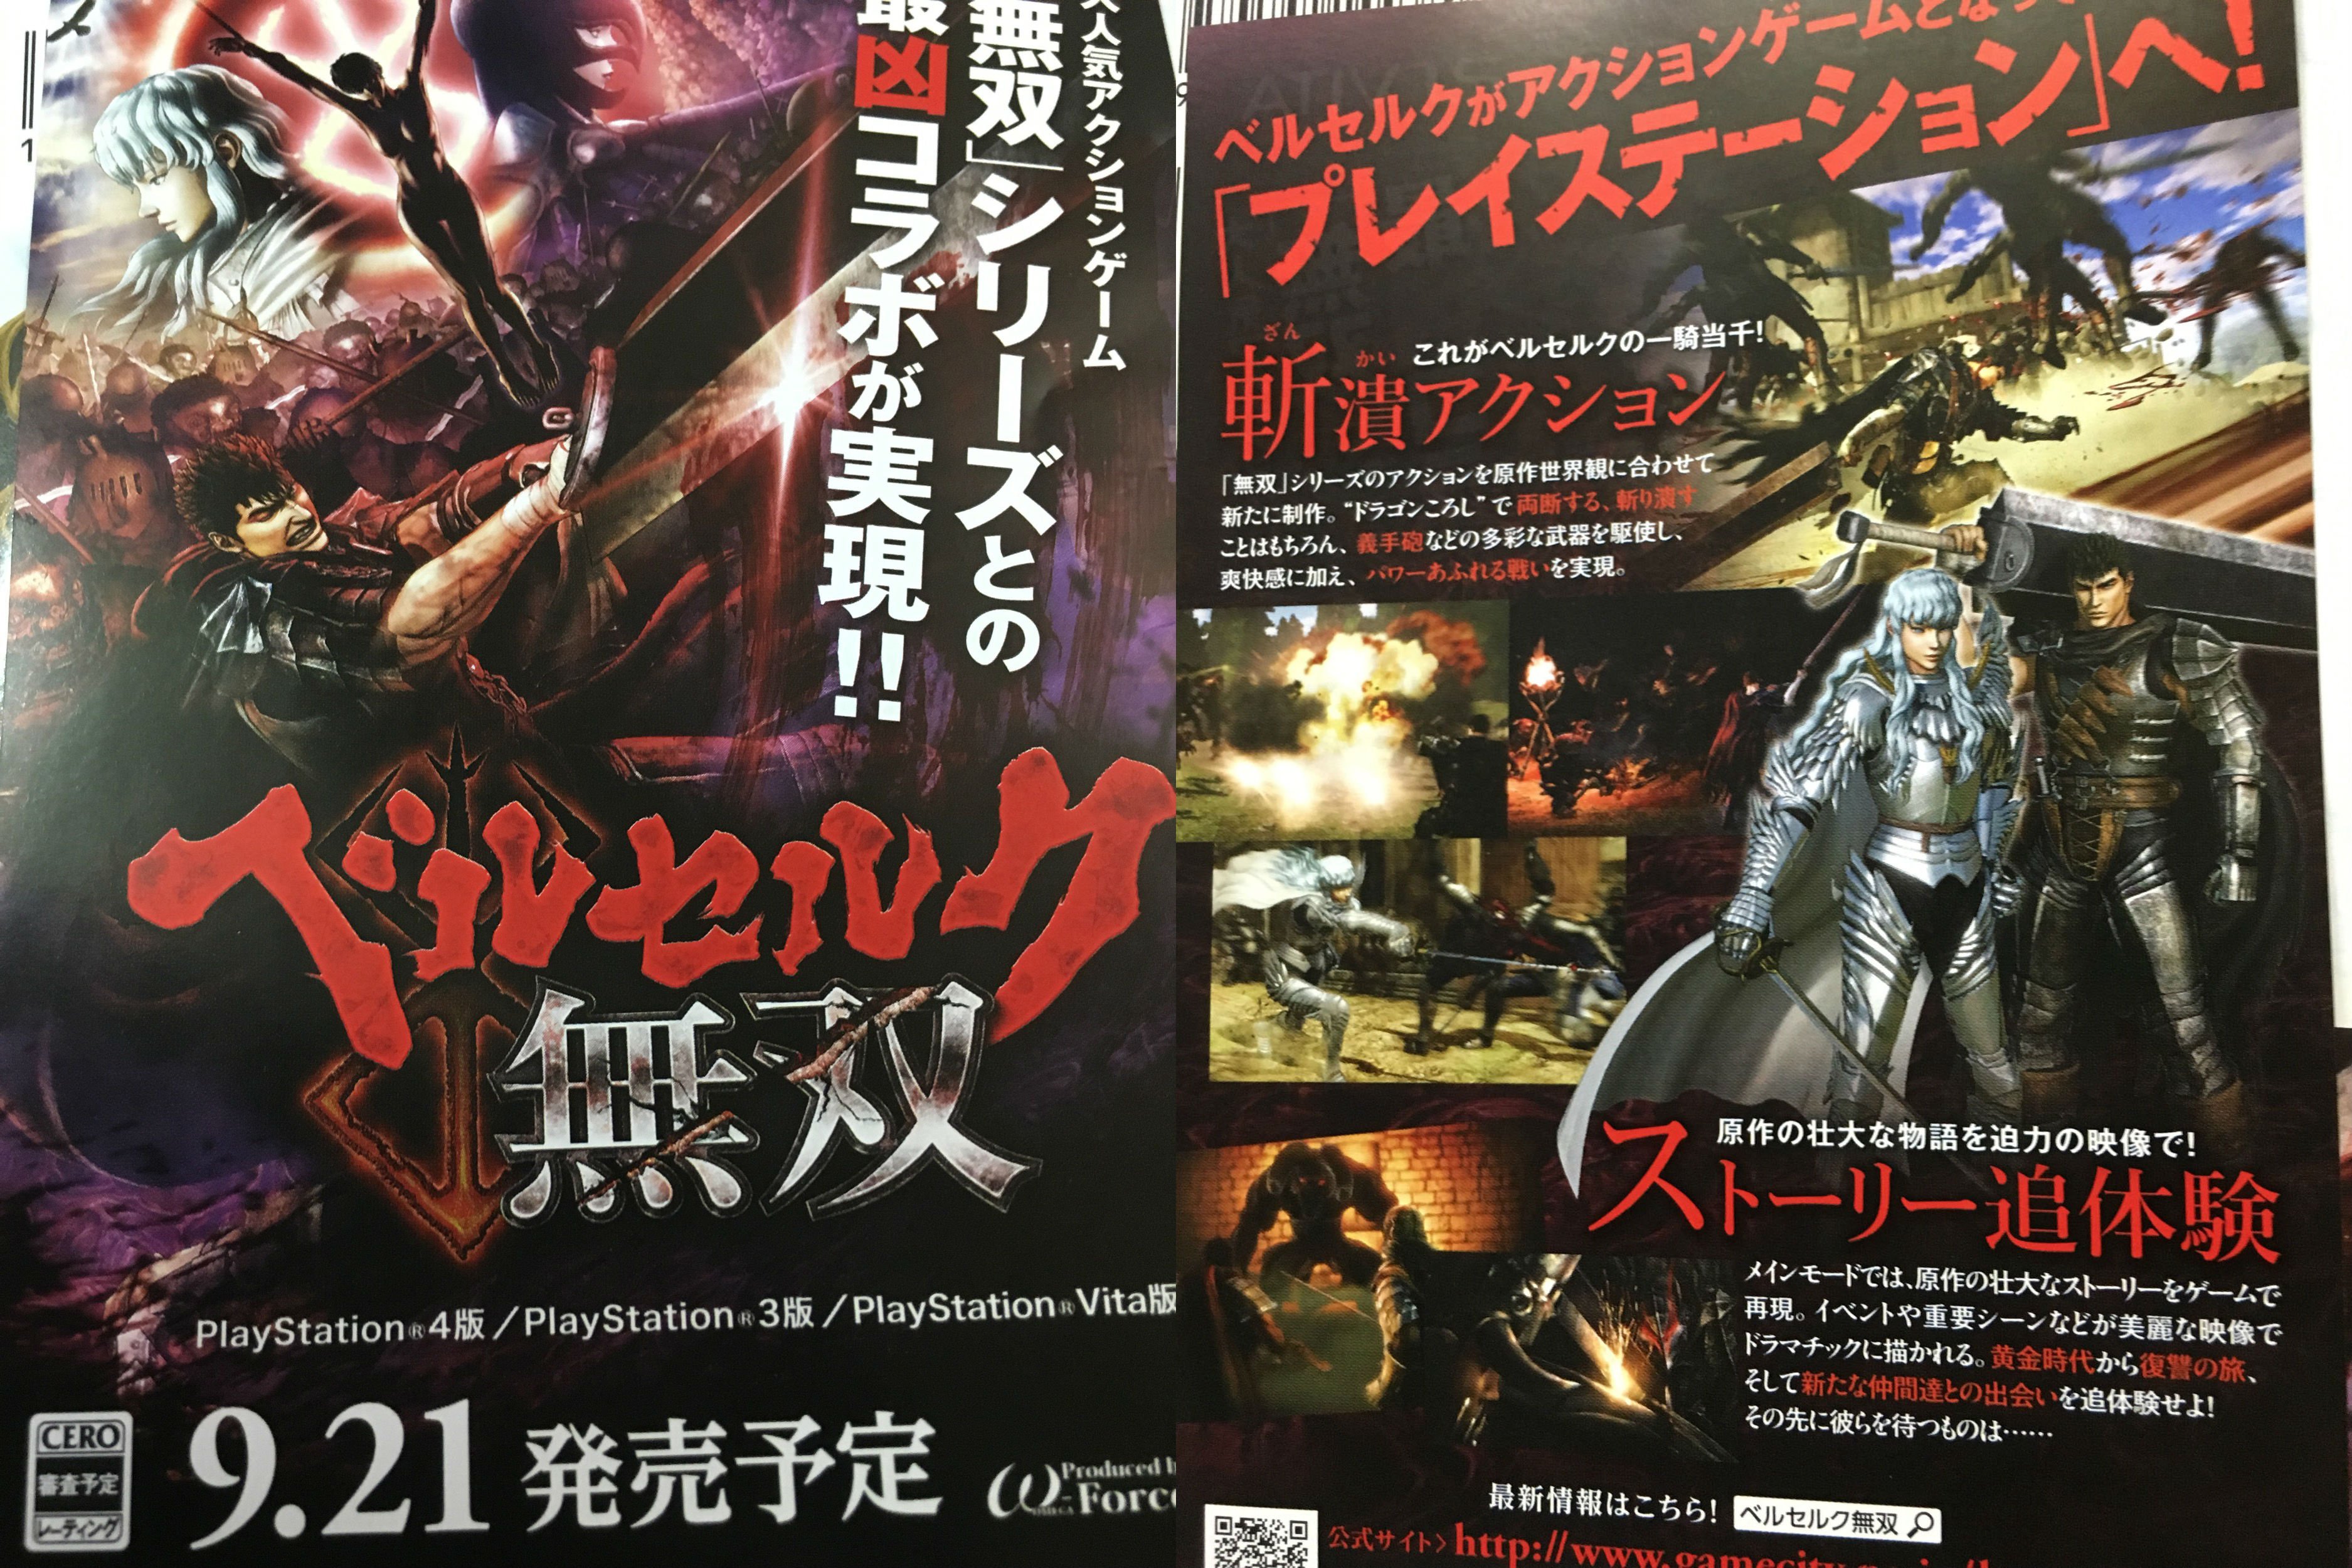 “Berserk Warriors” Japanese Release Date Revealed